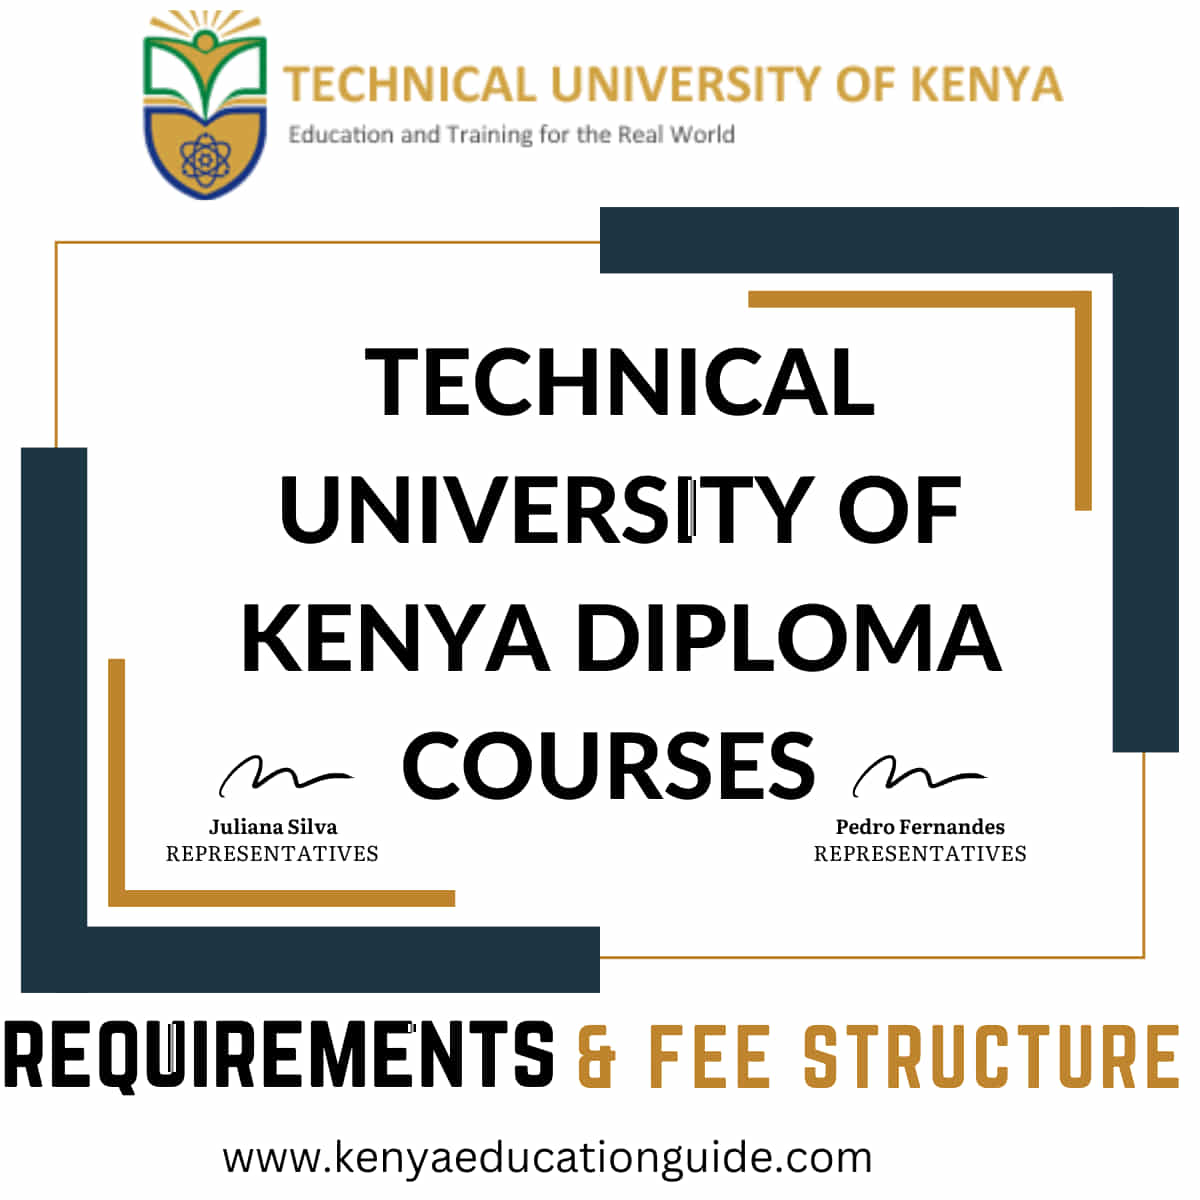 Technical University of Kenya diploma courses